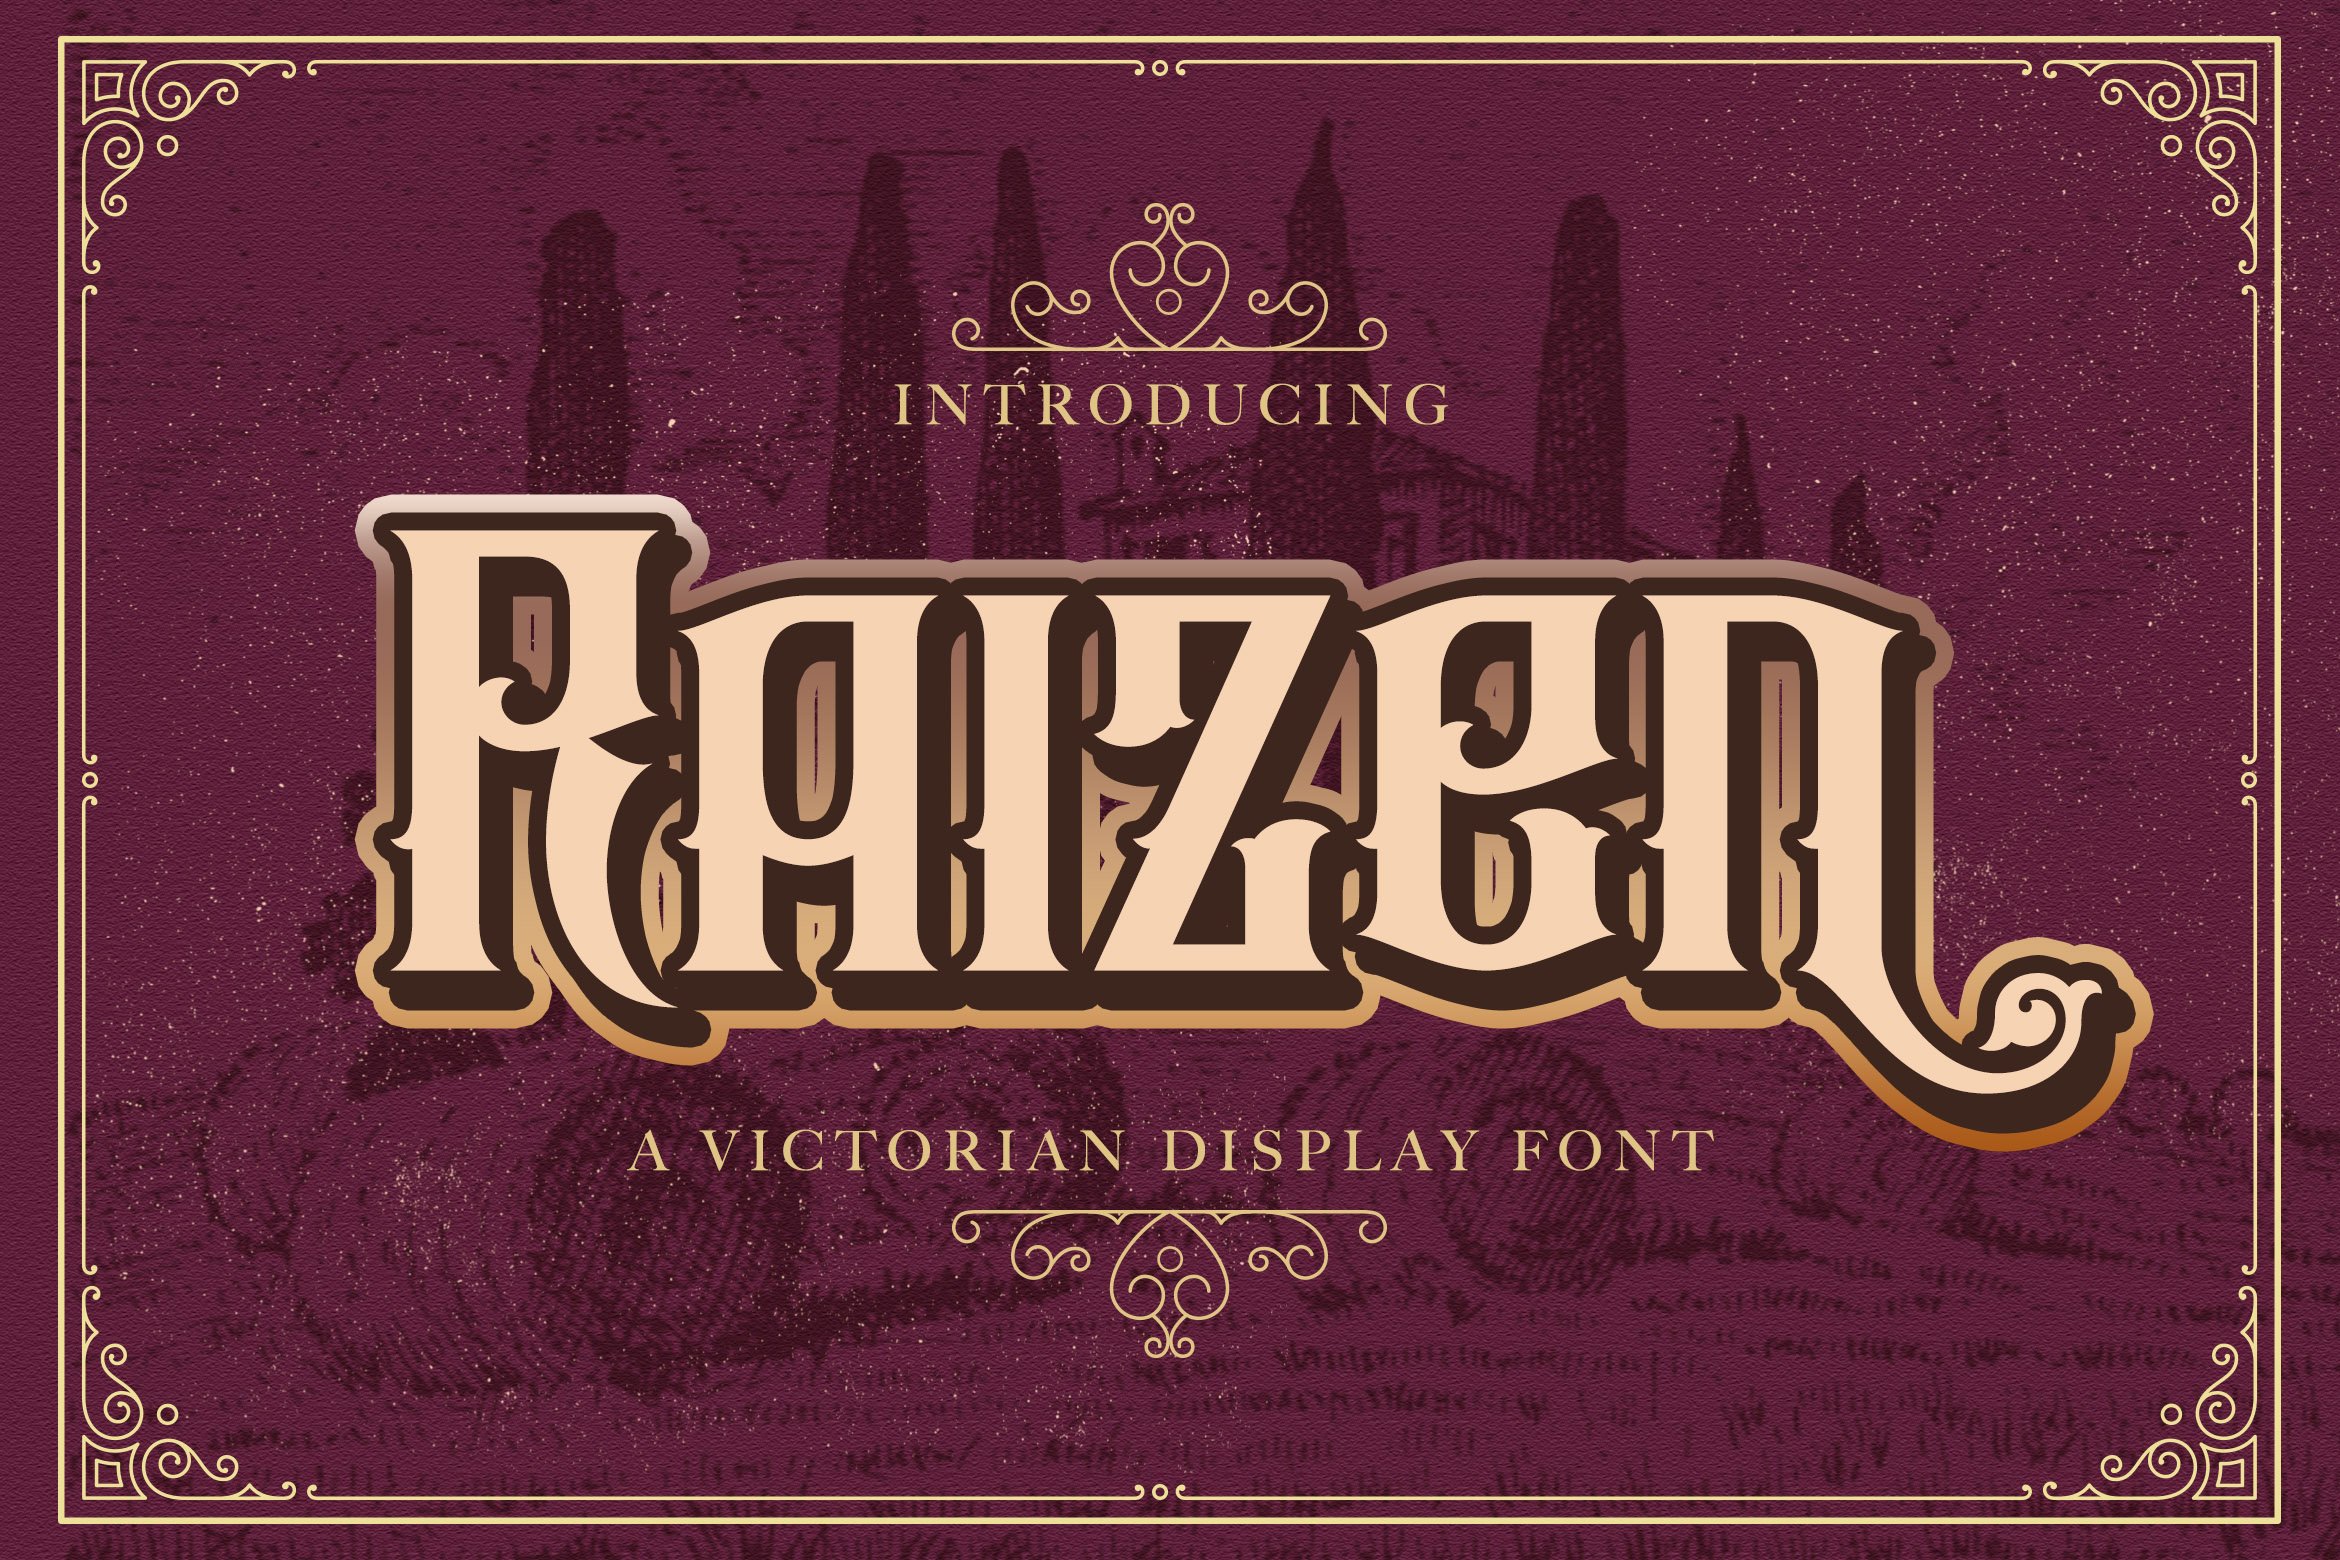 Raizen - Victorian Style Font cover image.